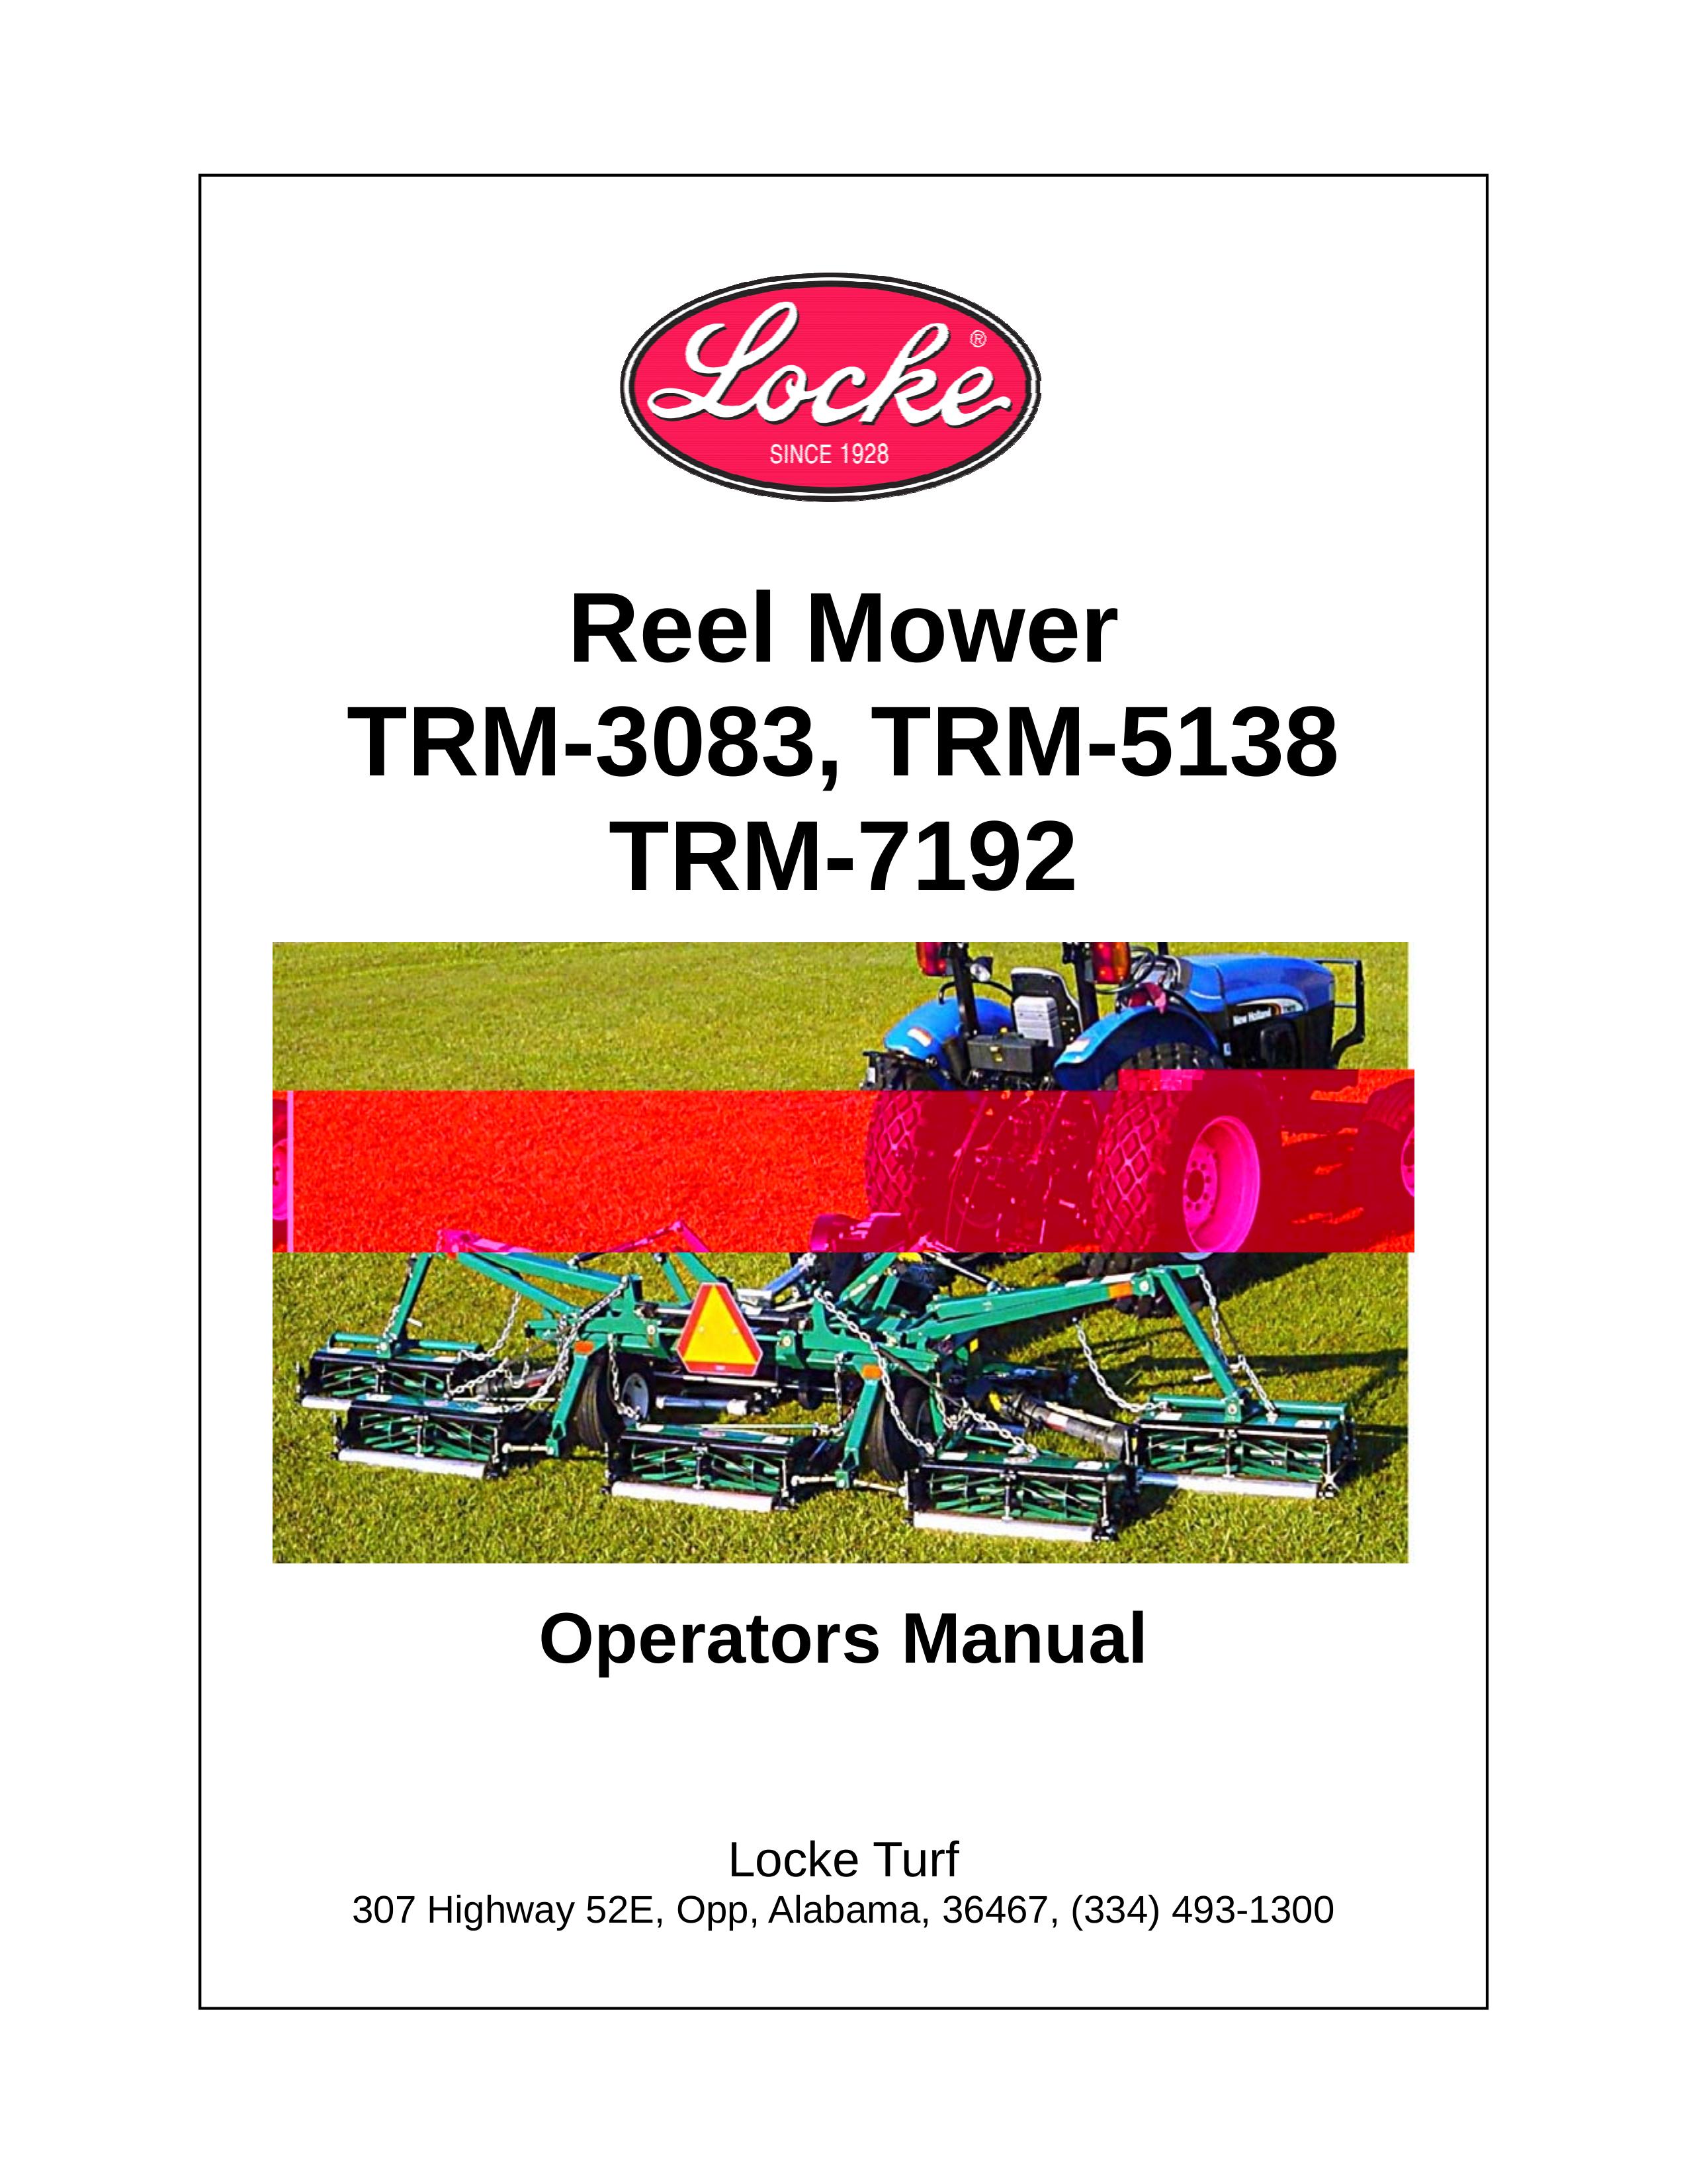 Locke TRM-3083 Lawn Mower User Manual